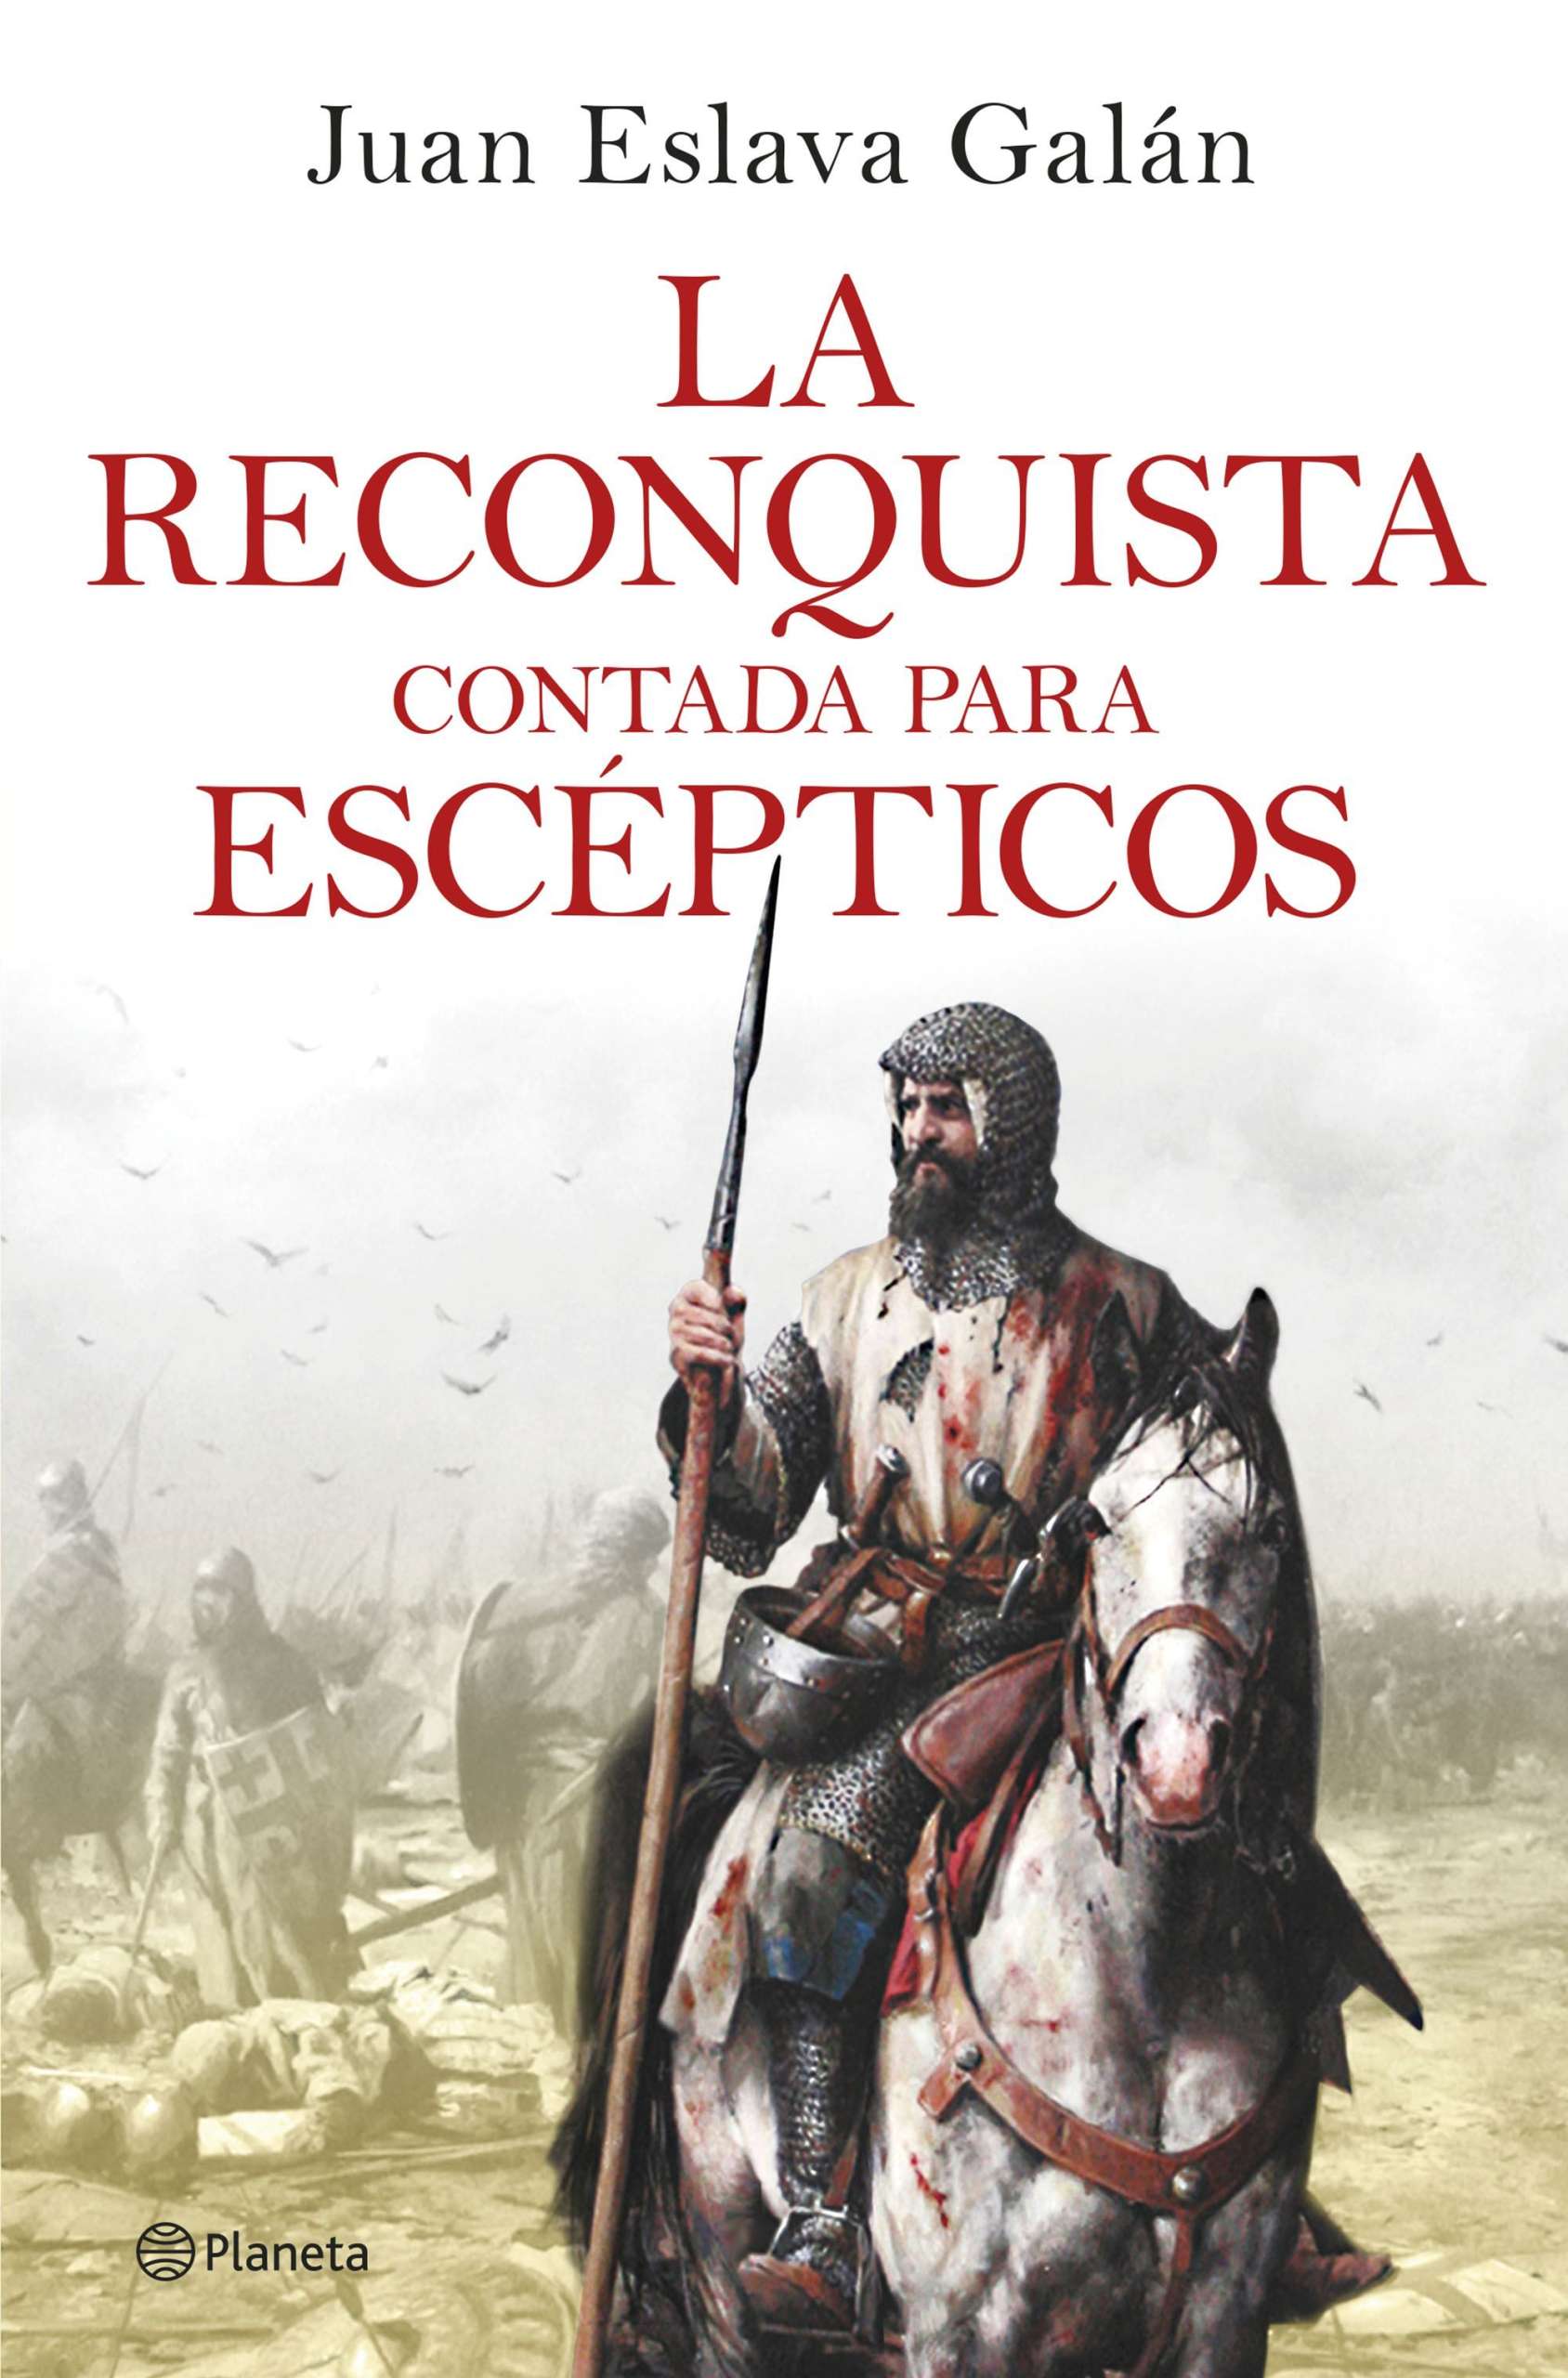 'La Reconquista contada para escépticos' de Juan Eslava Galán